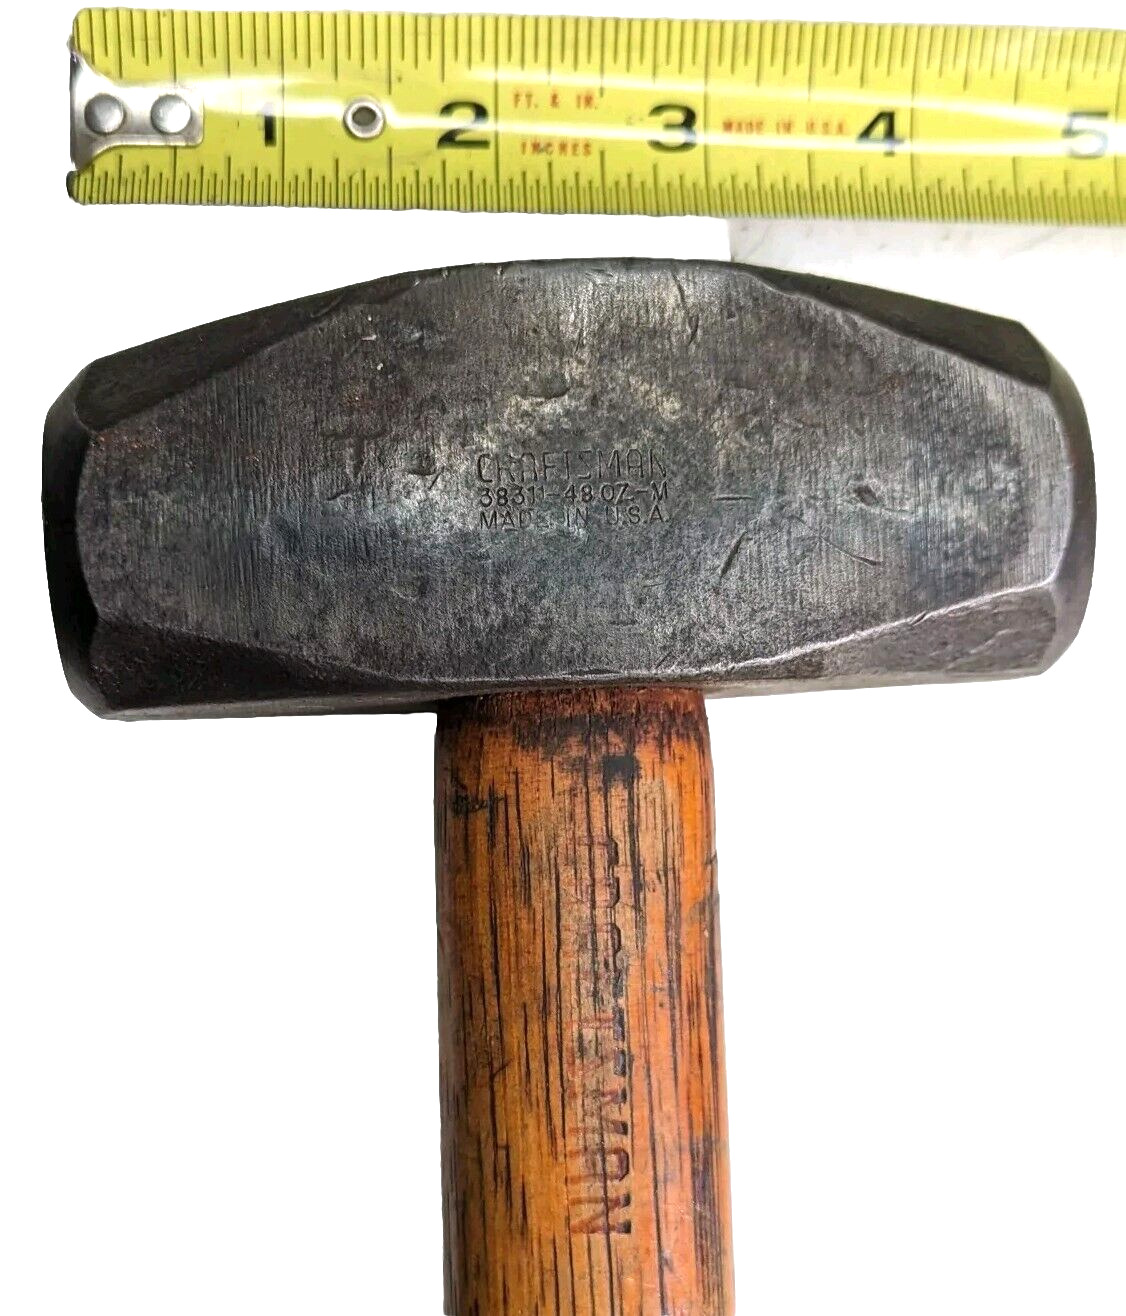 Craftsman 48 oz. Sledge Hammer 38311-M series Made in USA